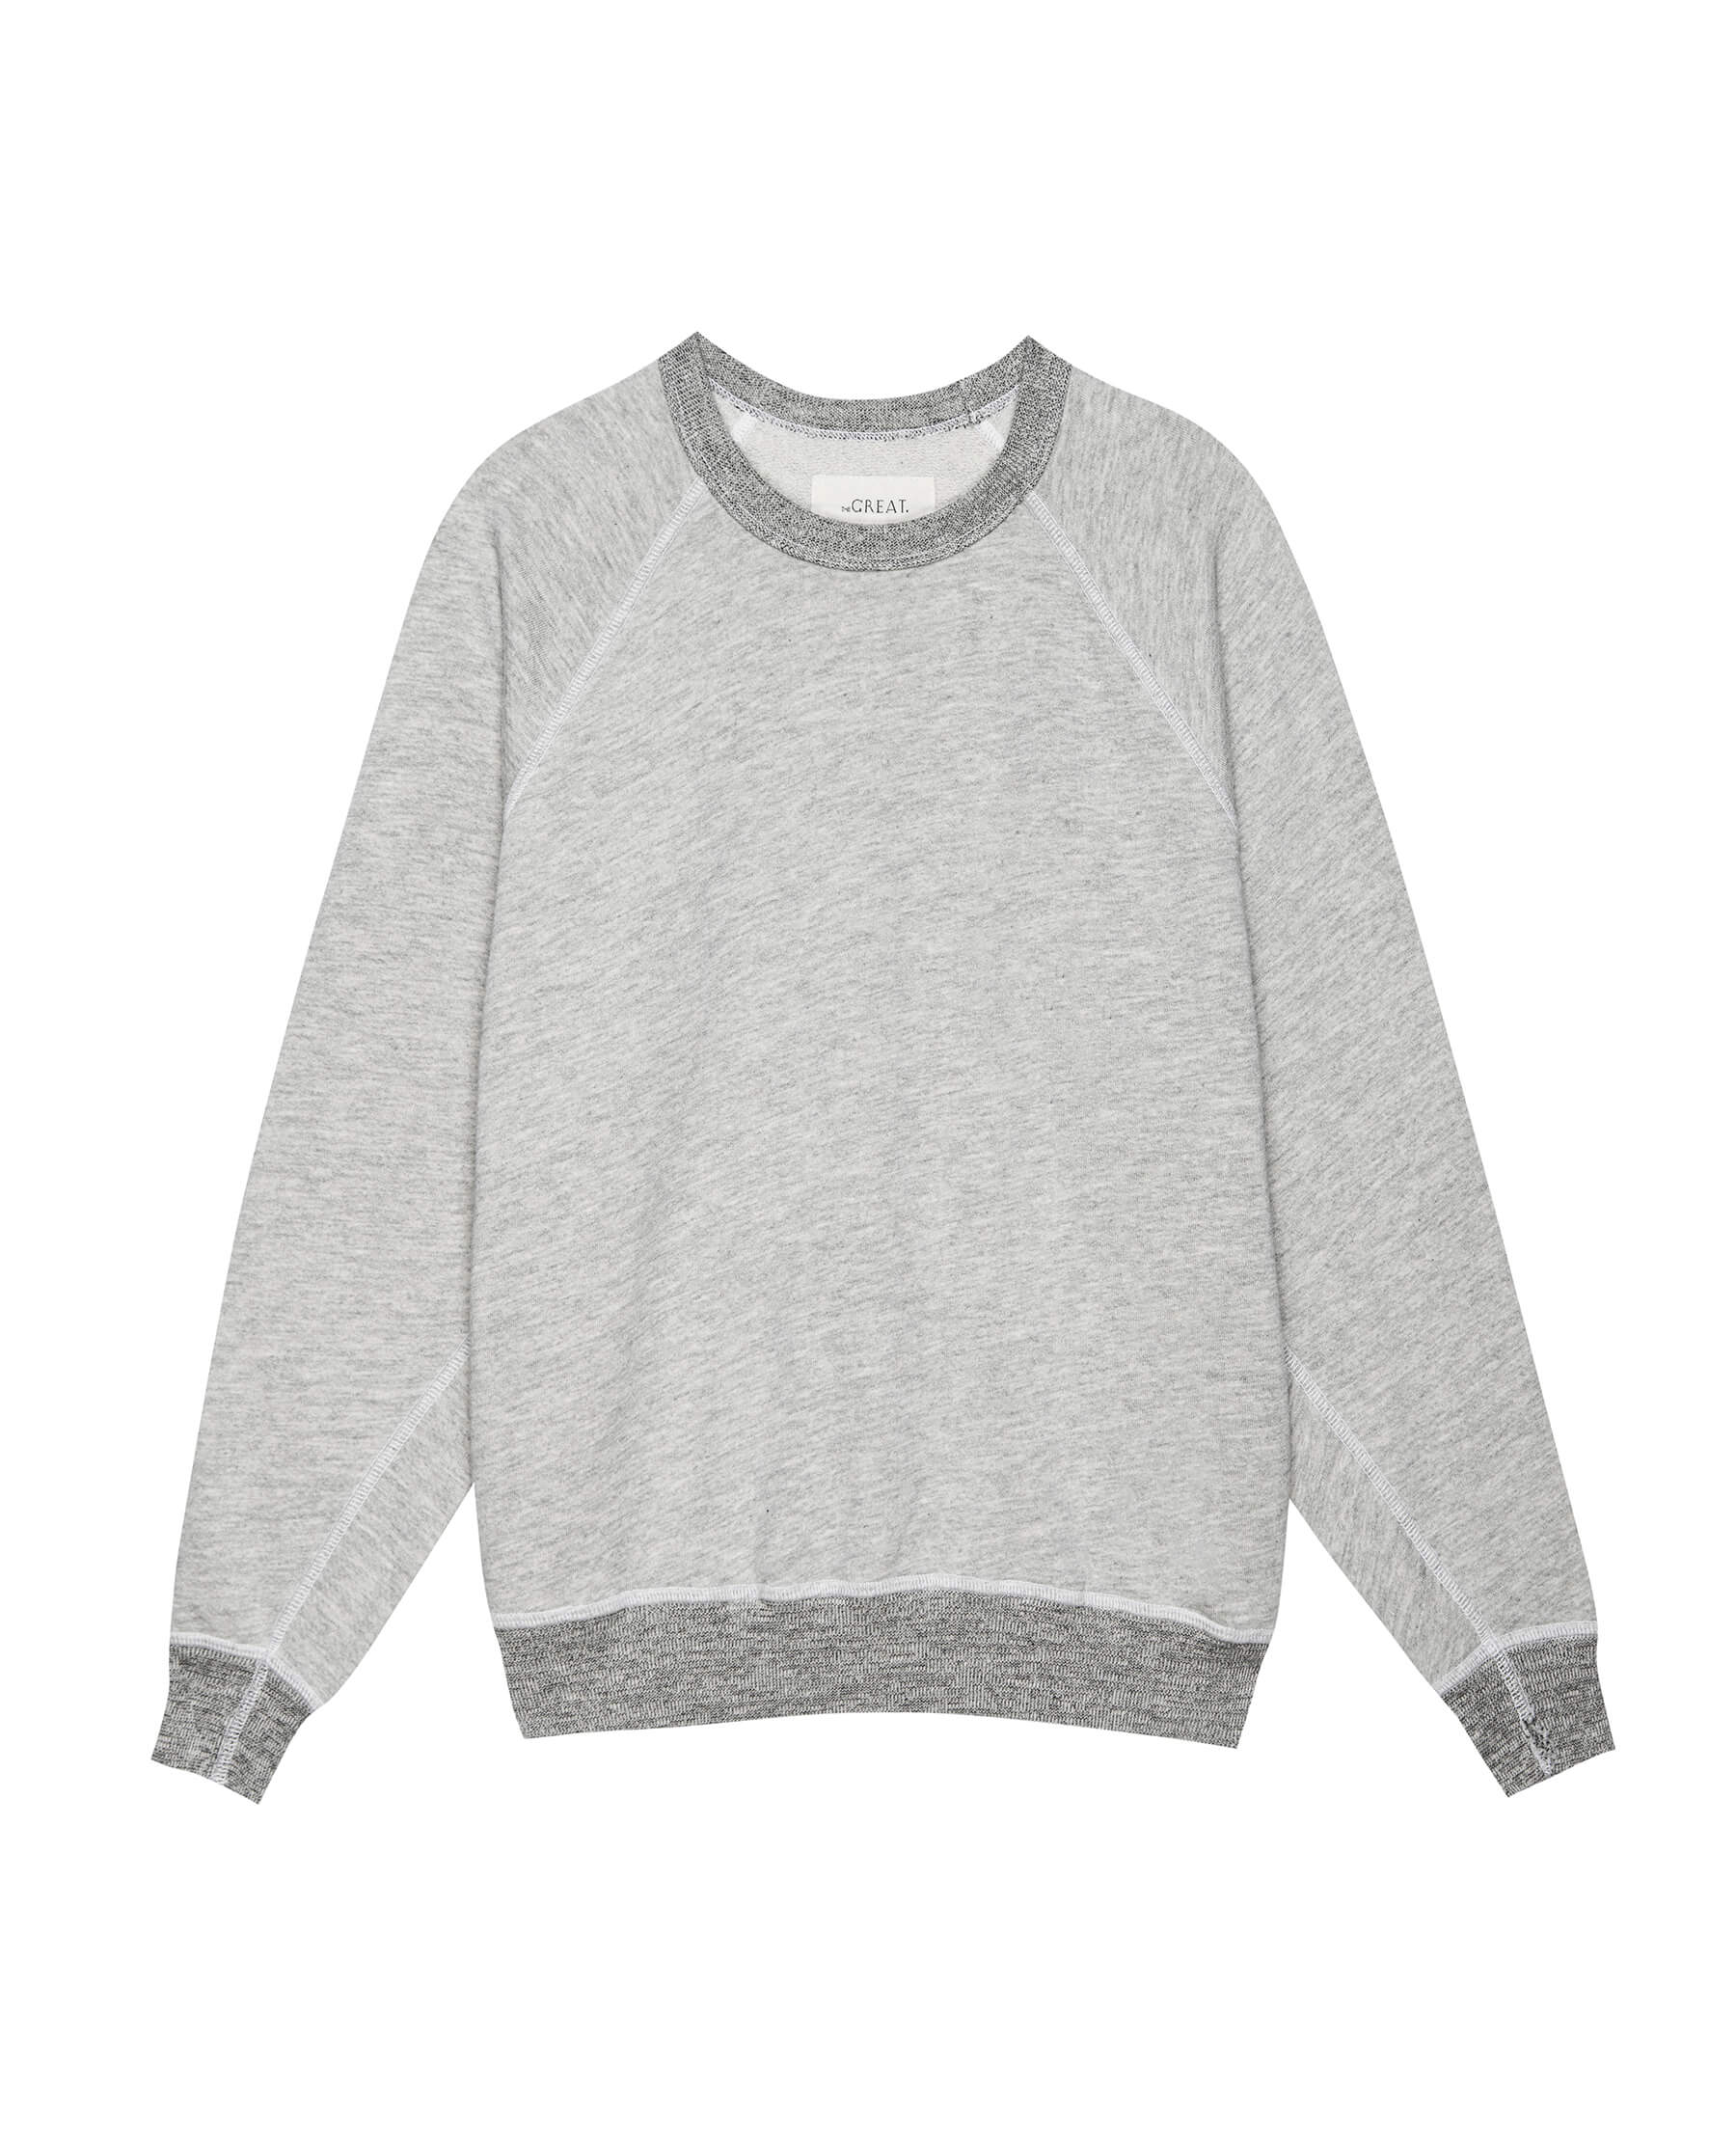 The College Sweatshirt. Solid -- Soft Heather Grey